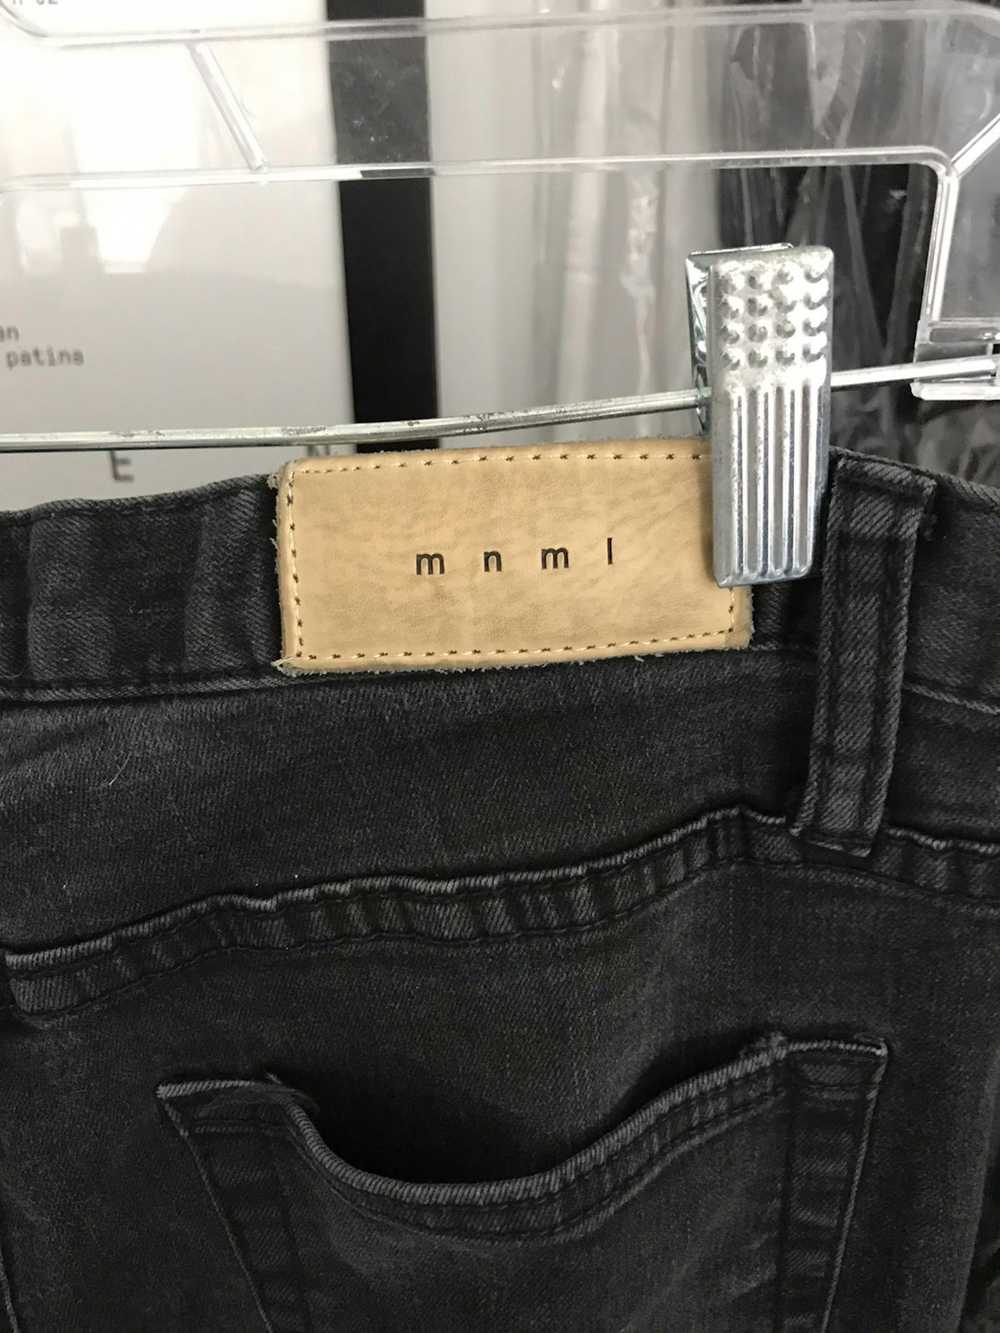 MNML MNML zipper jeans pants size 31 denim - image 6